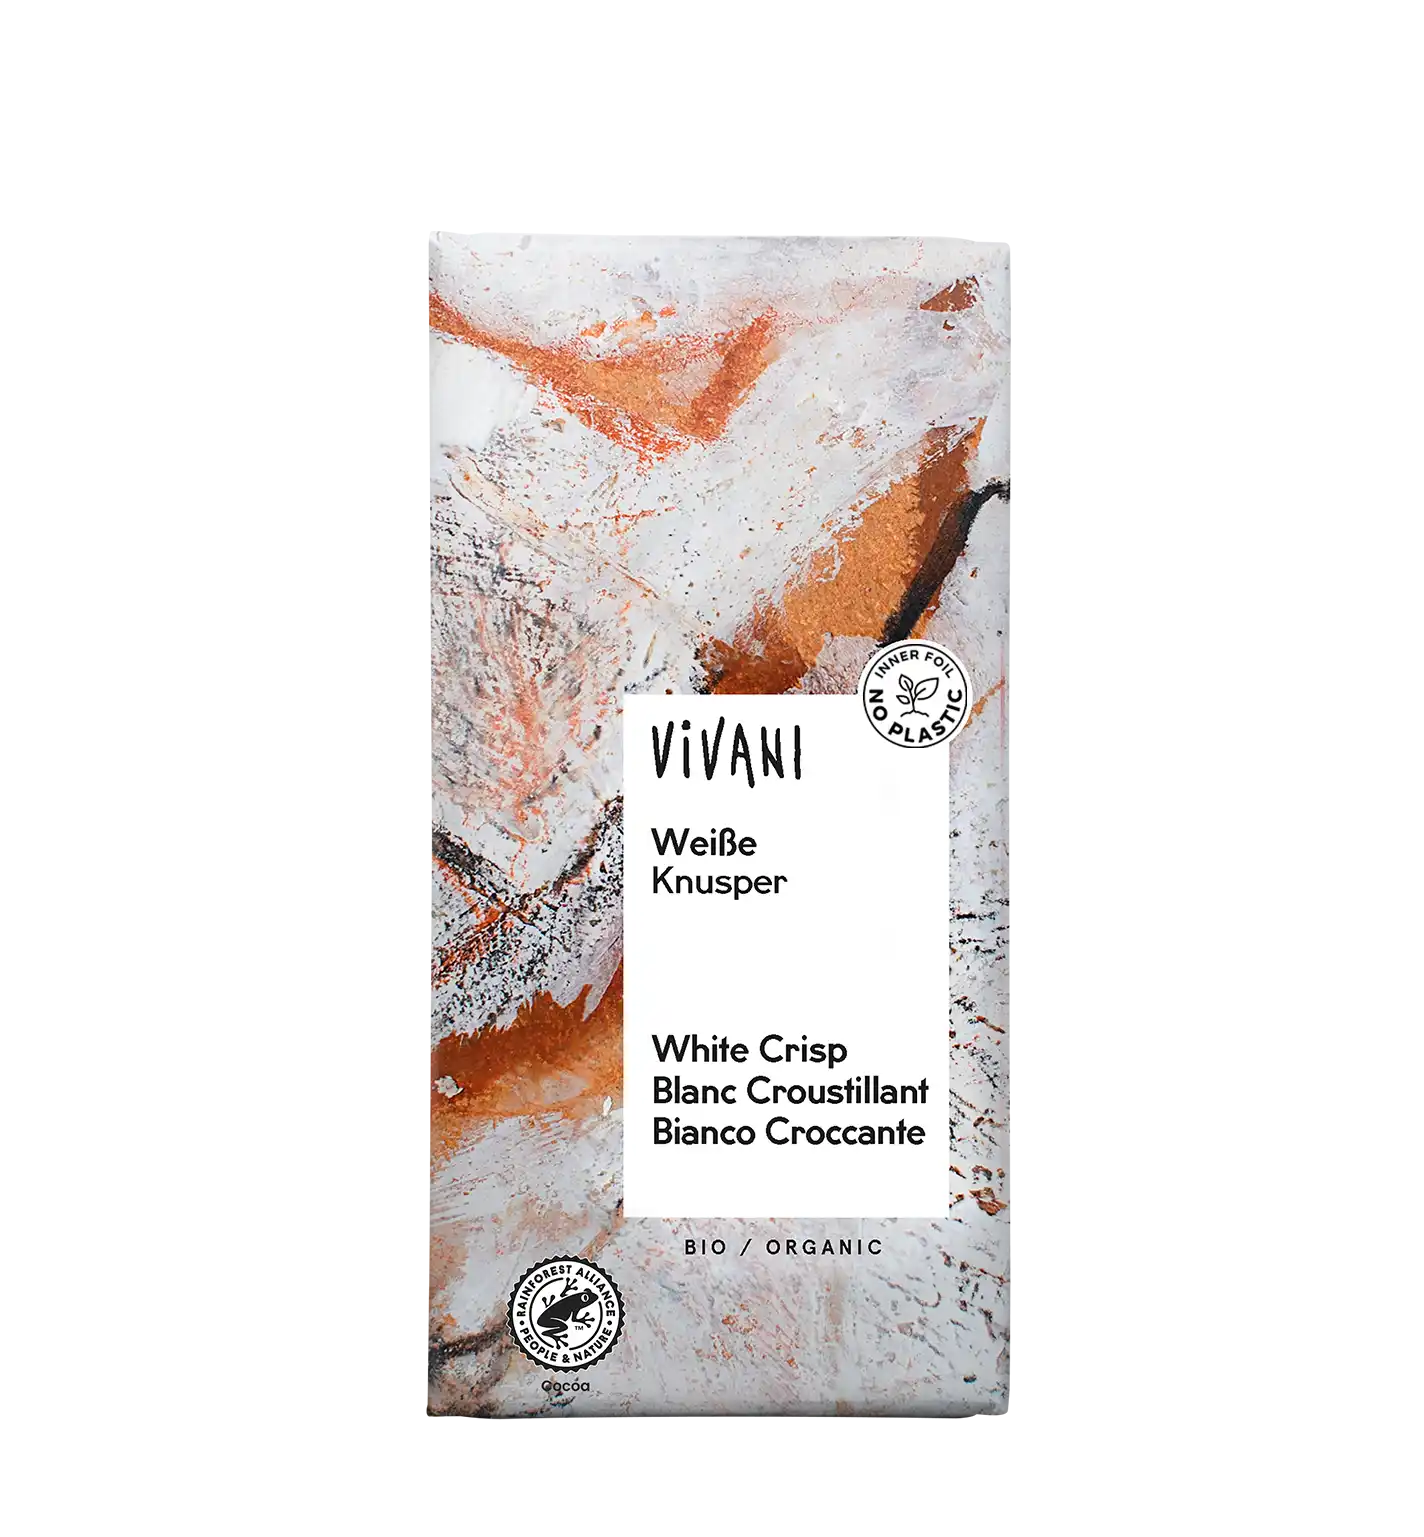 VIVANI’s organic White Crisp Chocolate with rice crispies